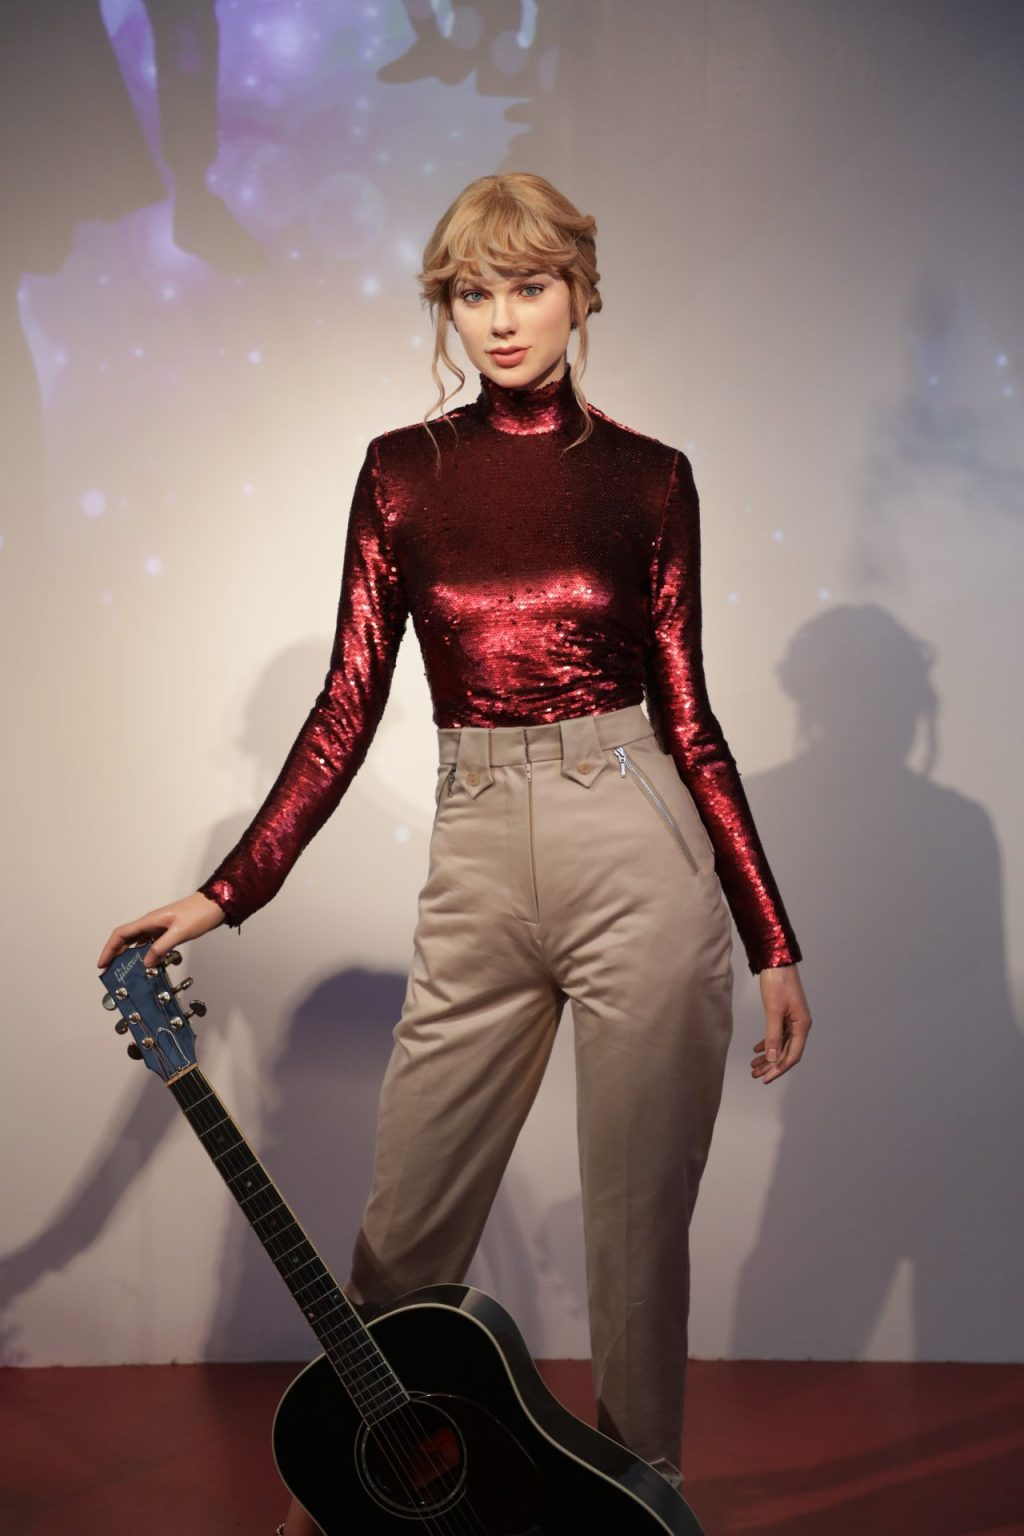 Taylor Swift's wax figure at Madame Tussauds Dubai. 